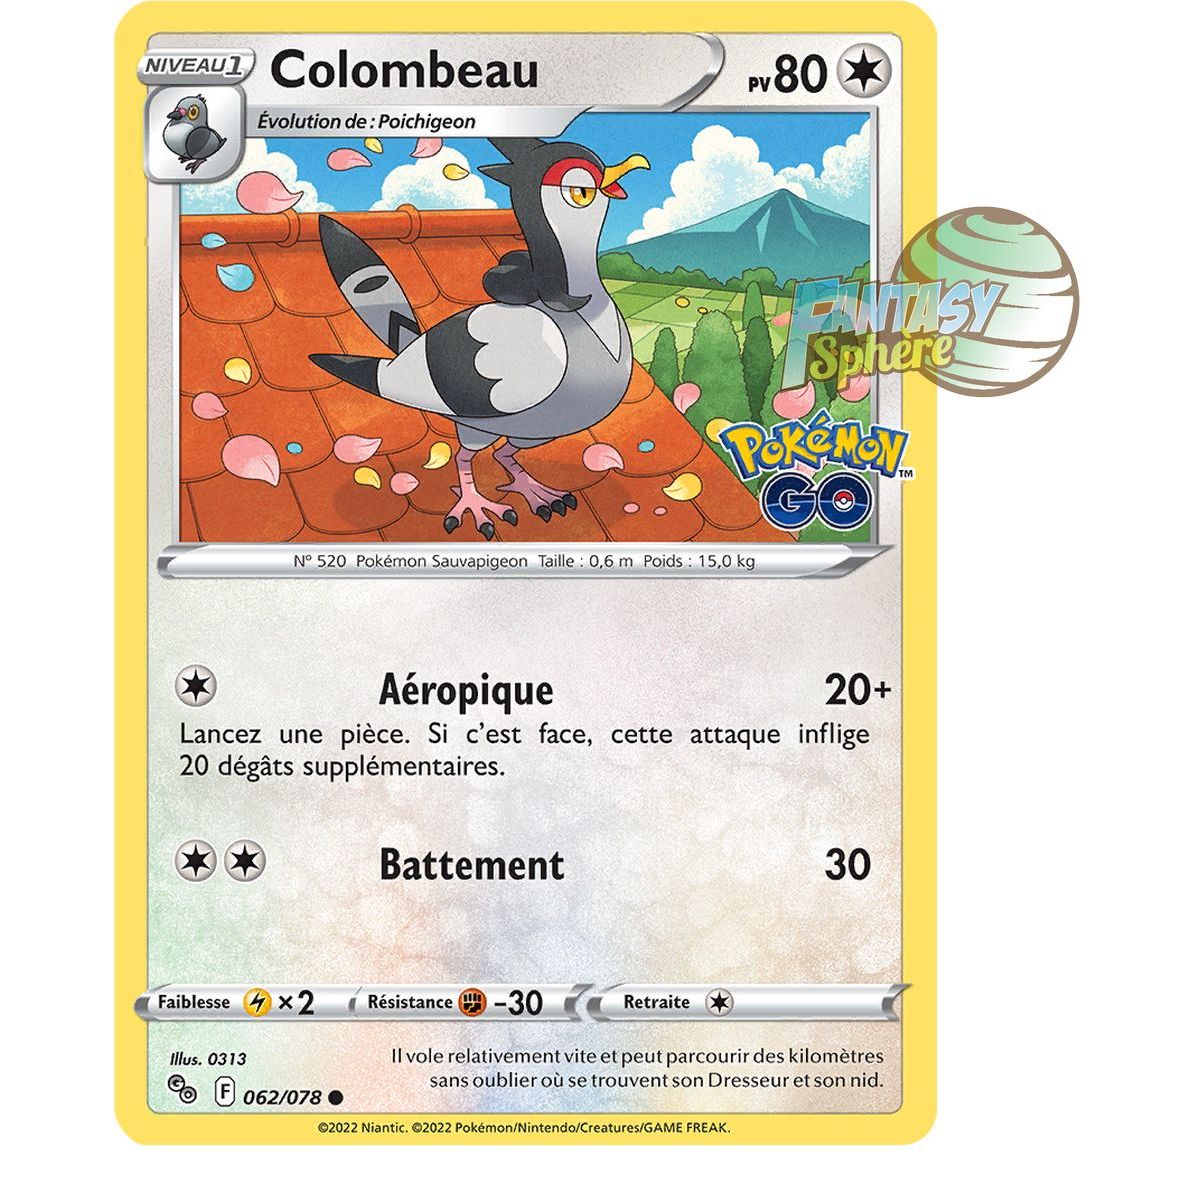 Colombeau - Commune 62/78 - Sword and Shield 10.5 Pokemon GO